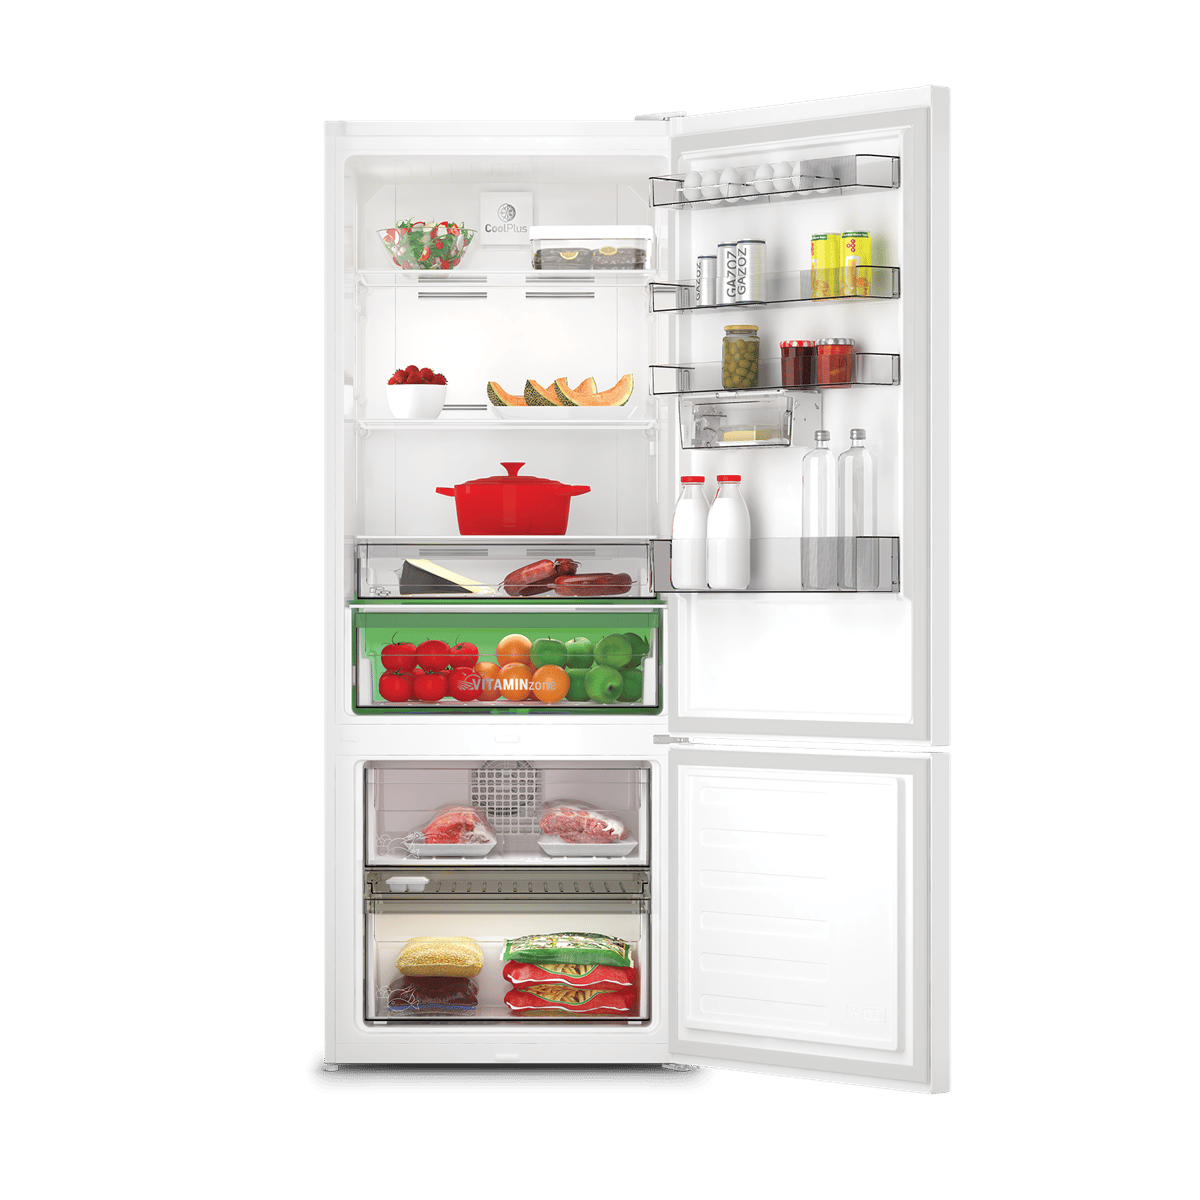 Arçelik 270531 EB No Frost Buzdolabı - Arçelik Beyaz Eşya